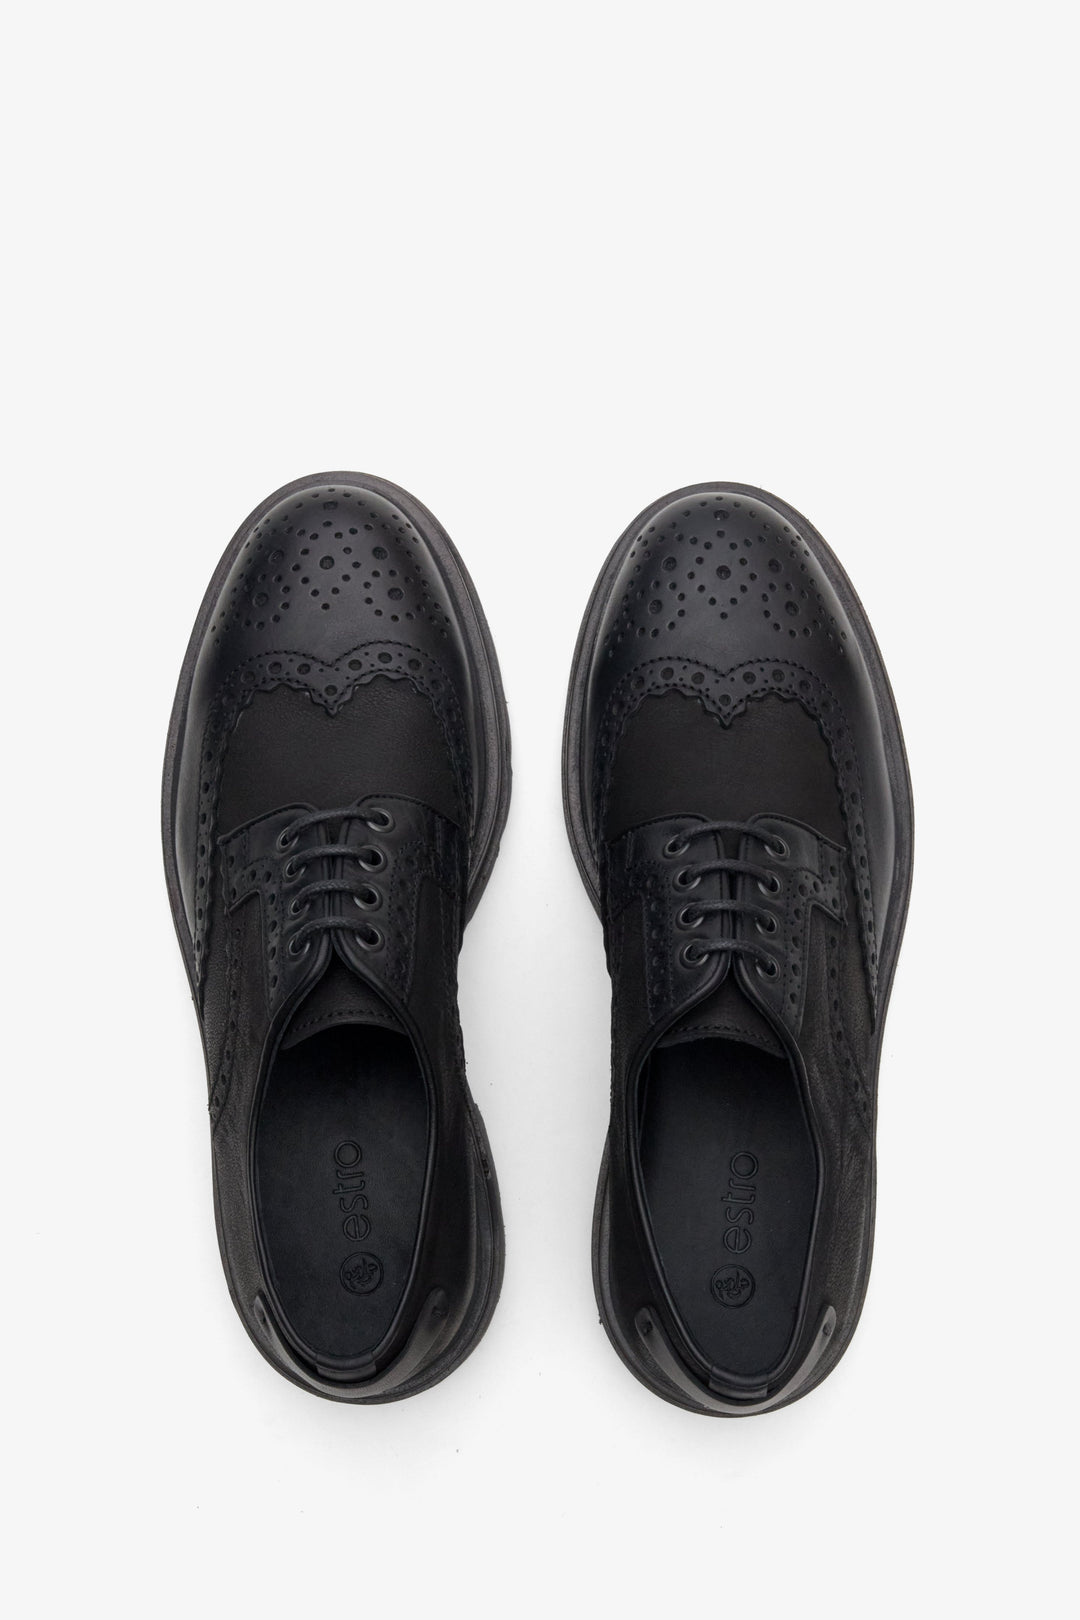 Men's black leather oxford shoes by Estro - top view presentation.